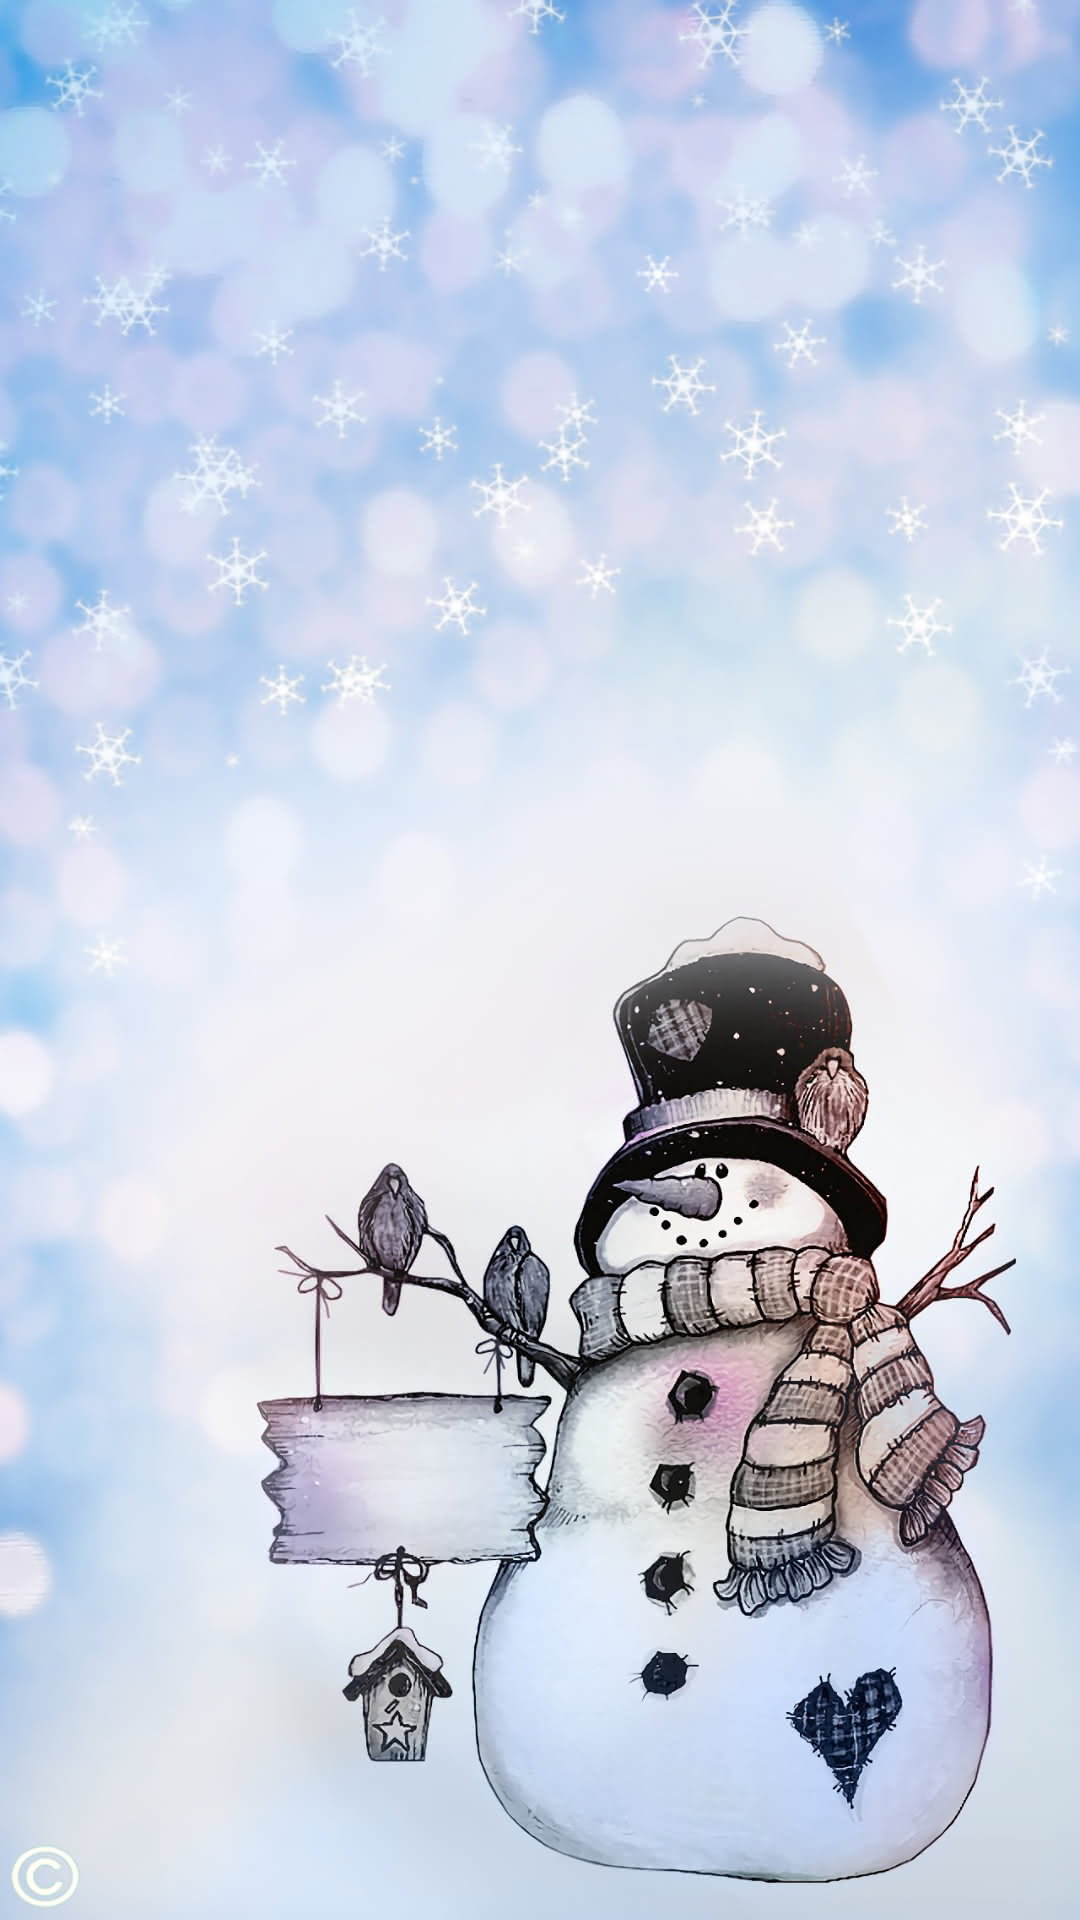 Snowman Illustration Iphone Wallpapers